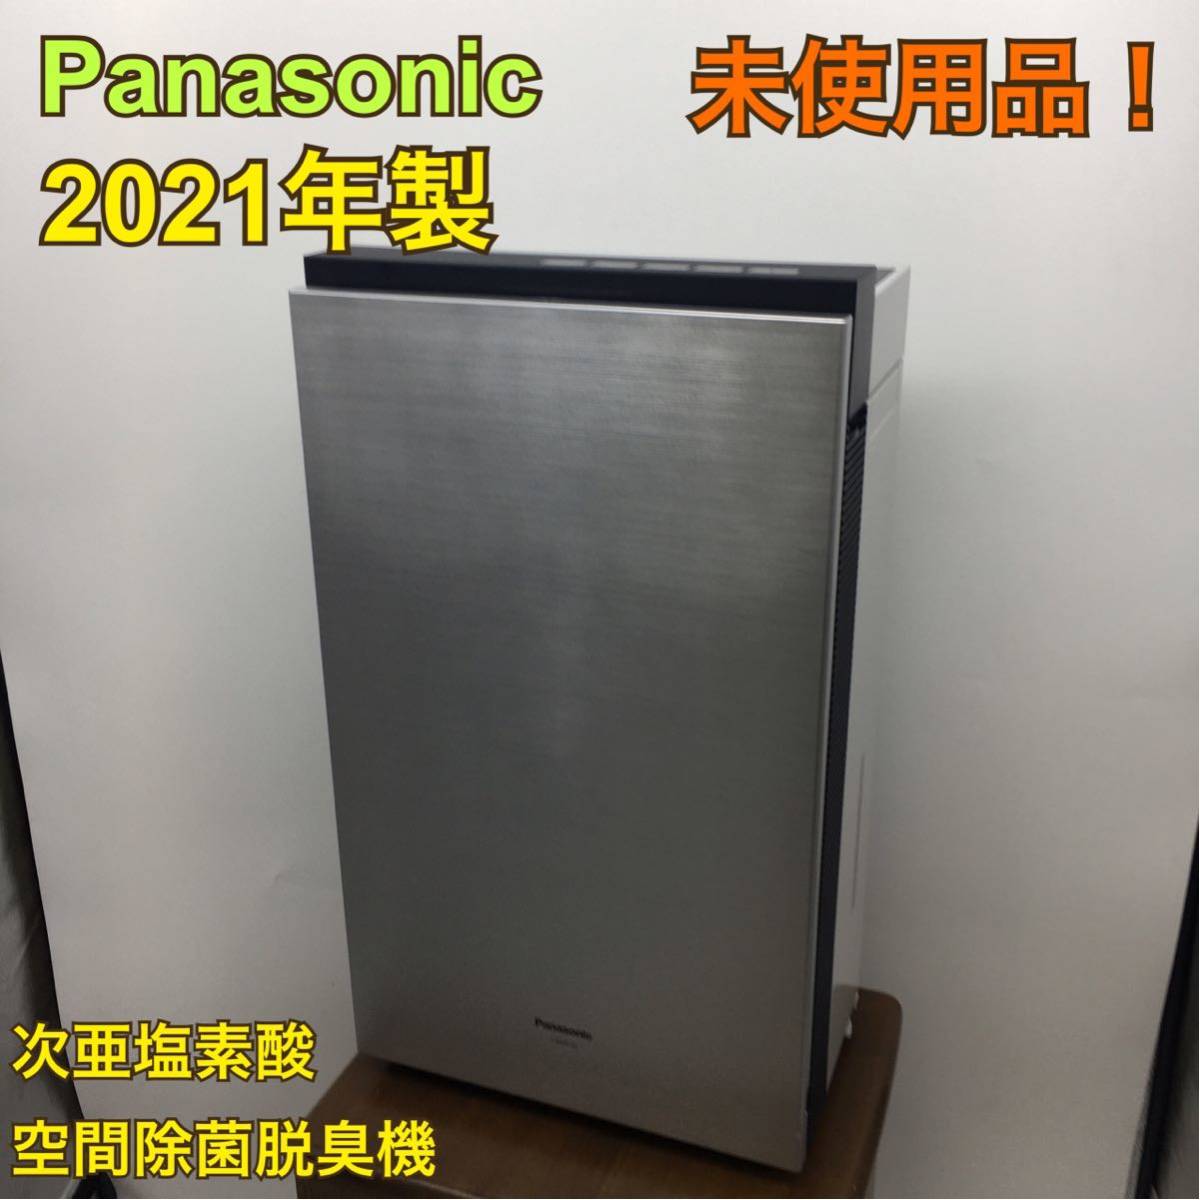 PanasonicF-MV3000次亜塩素酸空間除菌脱臭機ジアイーノziaino-